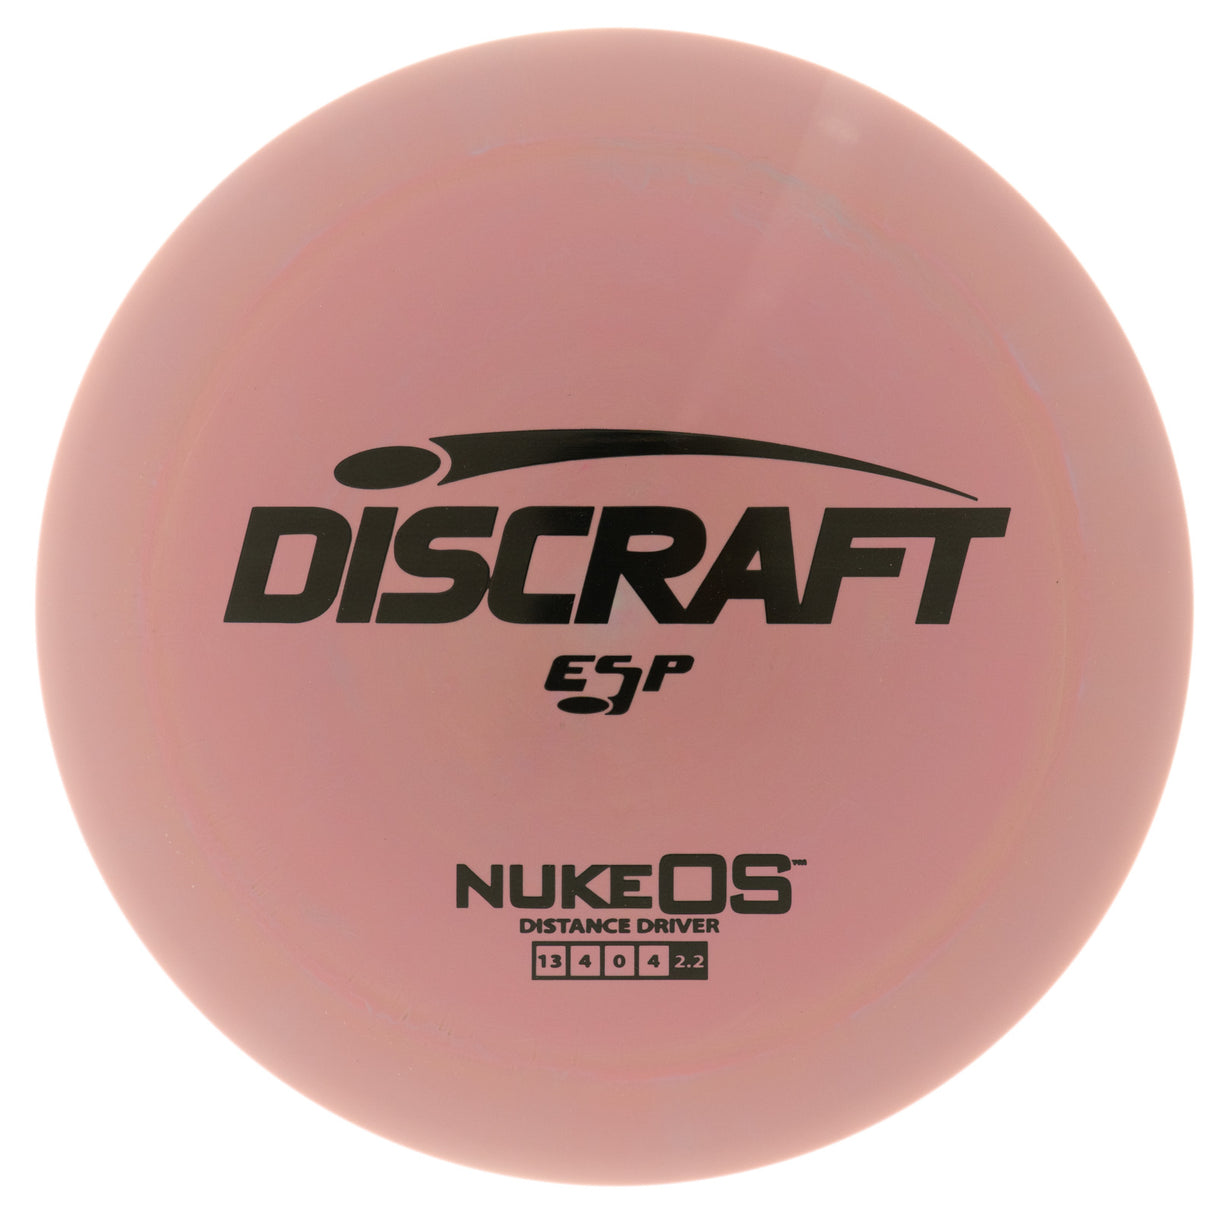 Discraft Nuke OS - ESP 172g | Style 0002